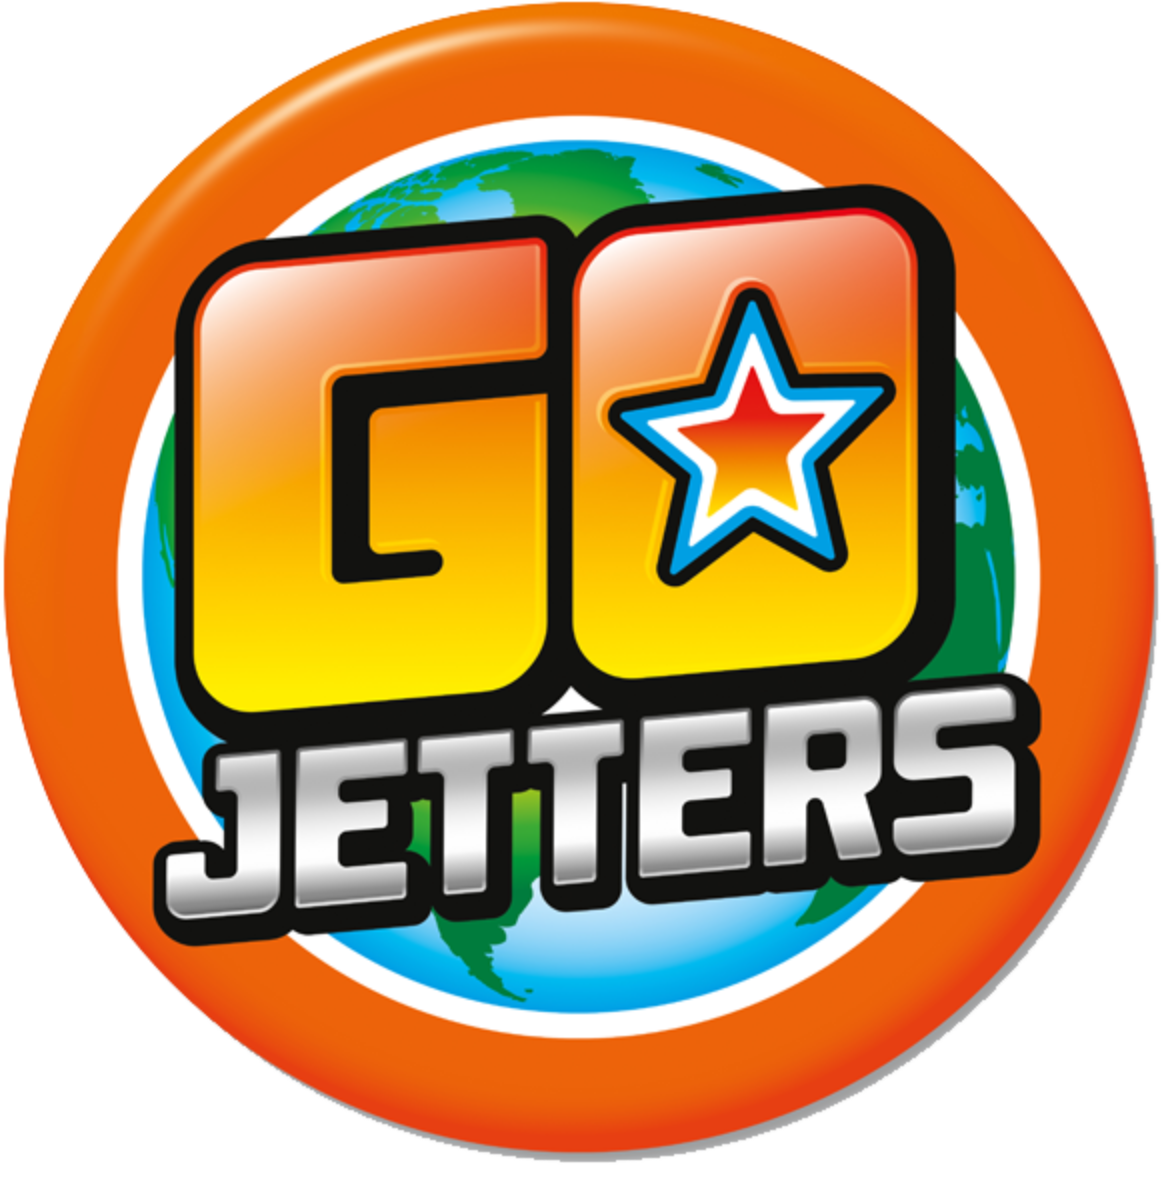 Go Jetters (2 DVDs Box Set)